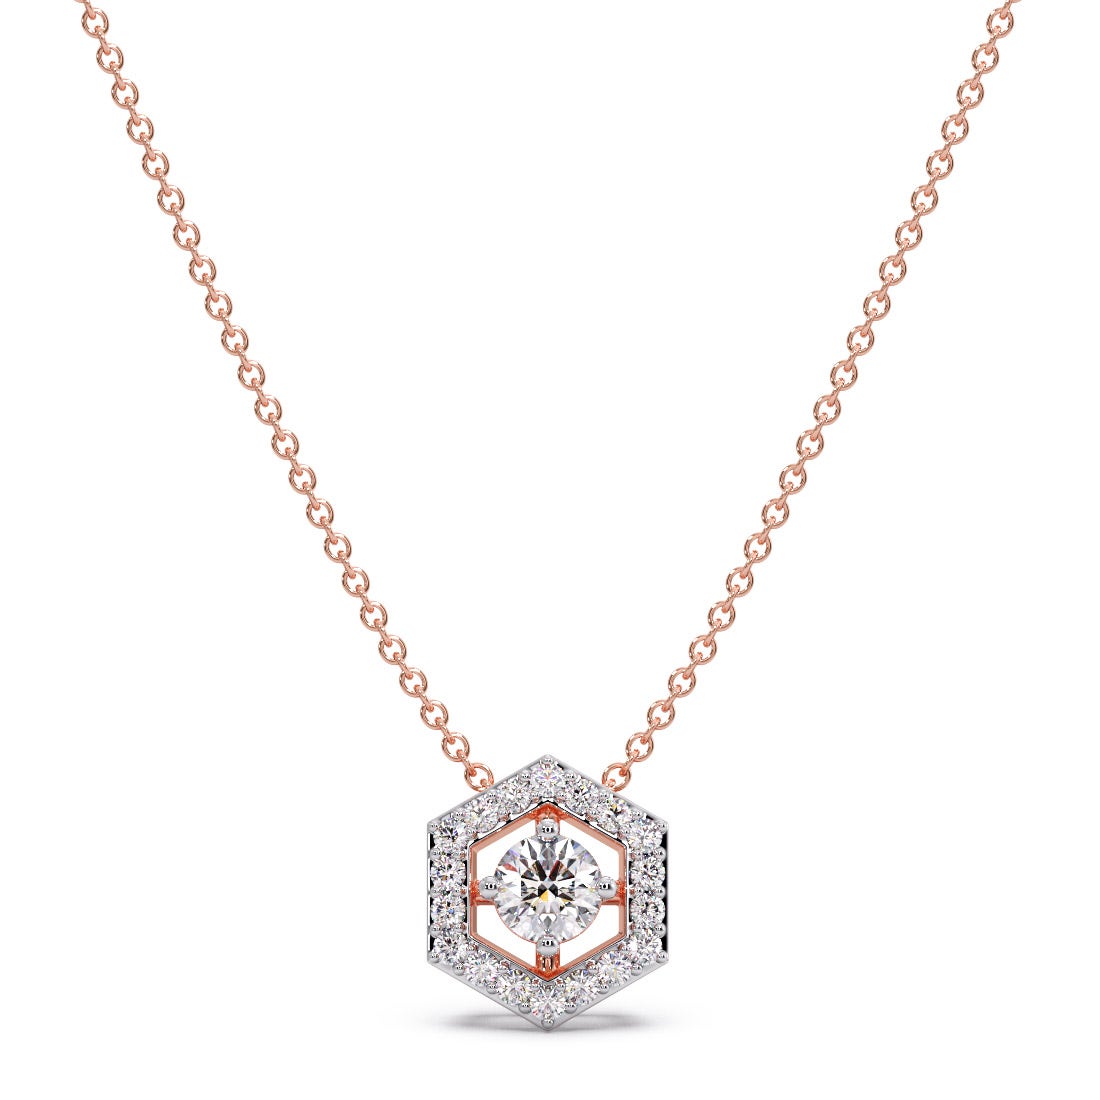 Jewish Solitaire Diamond Pendant with Chain